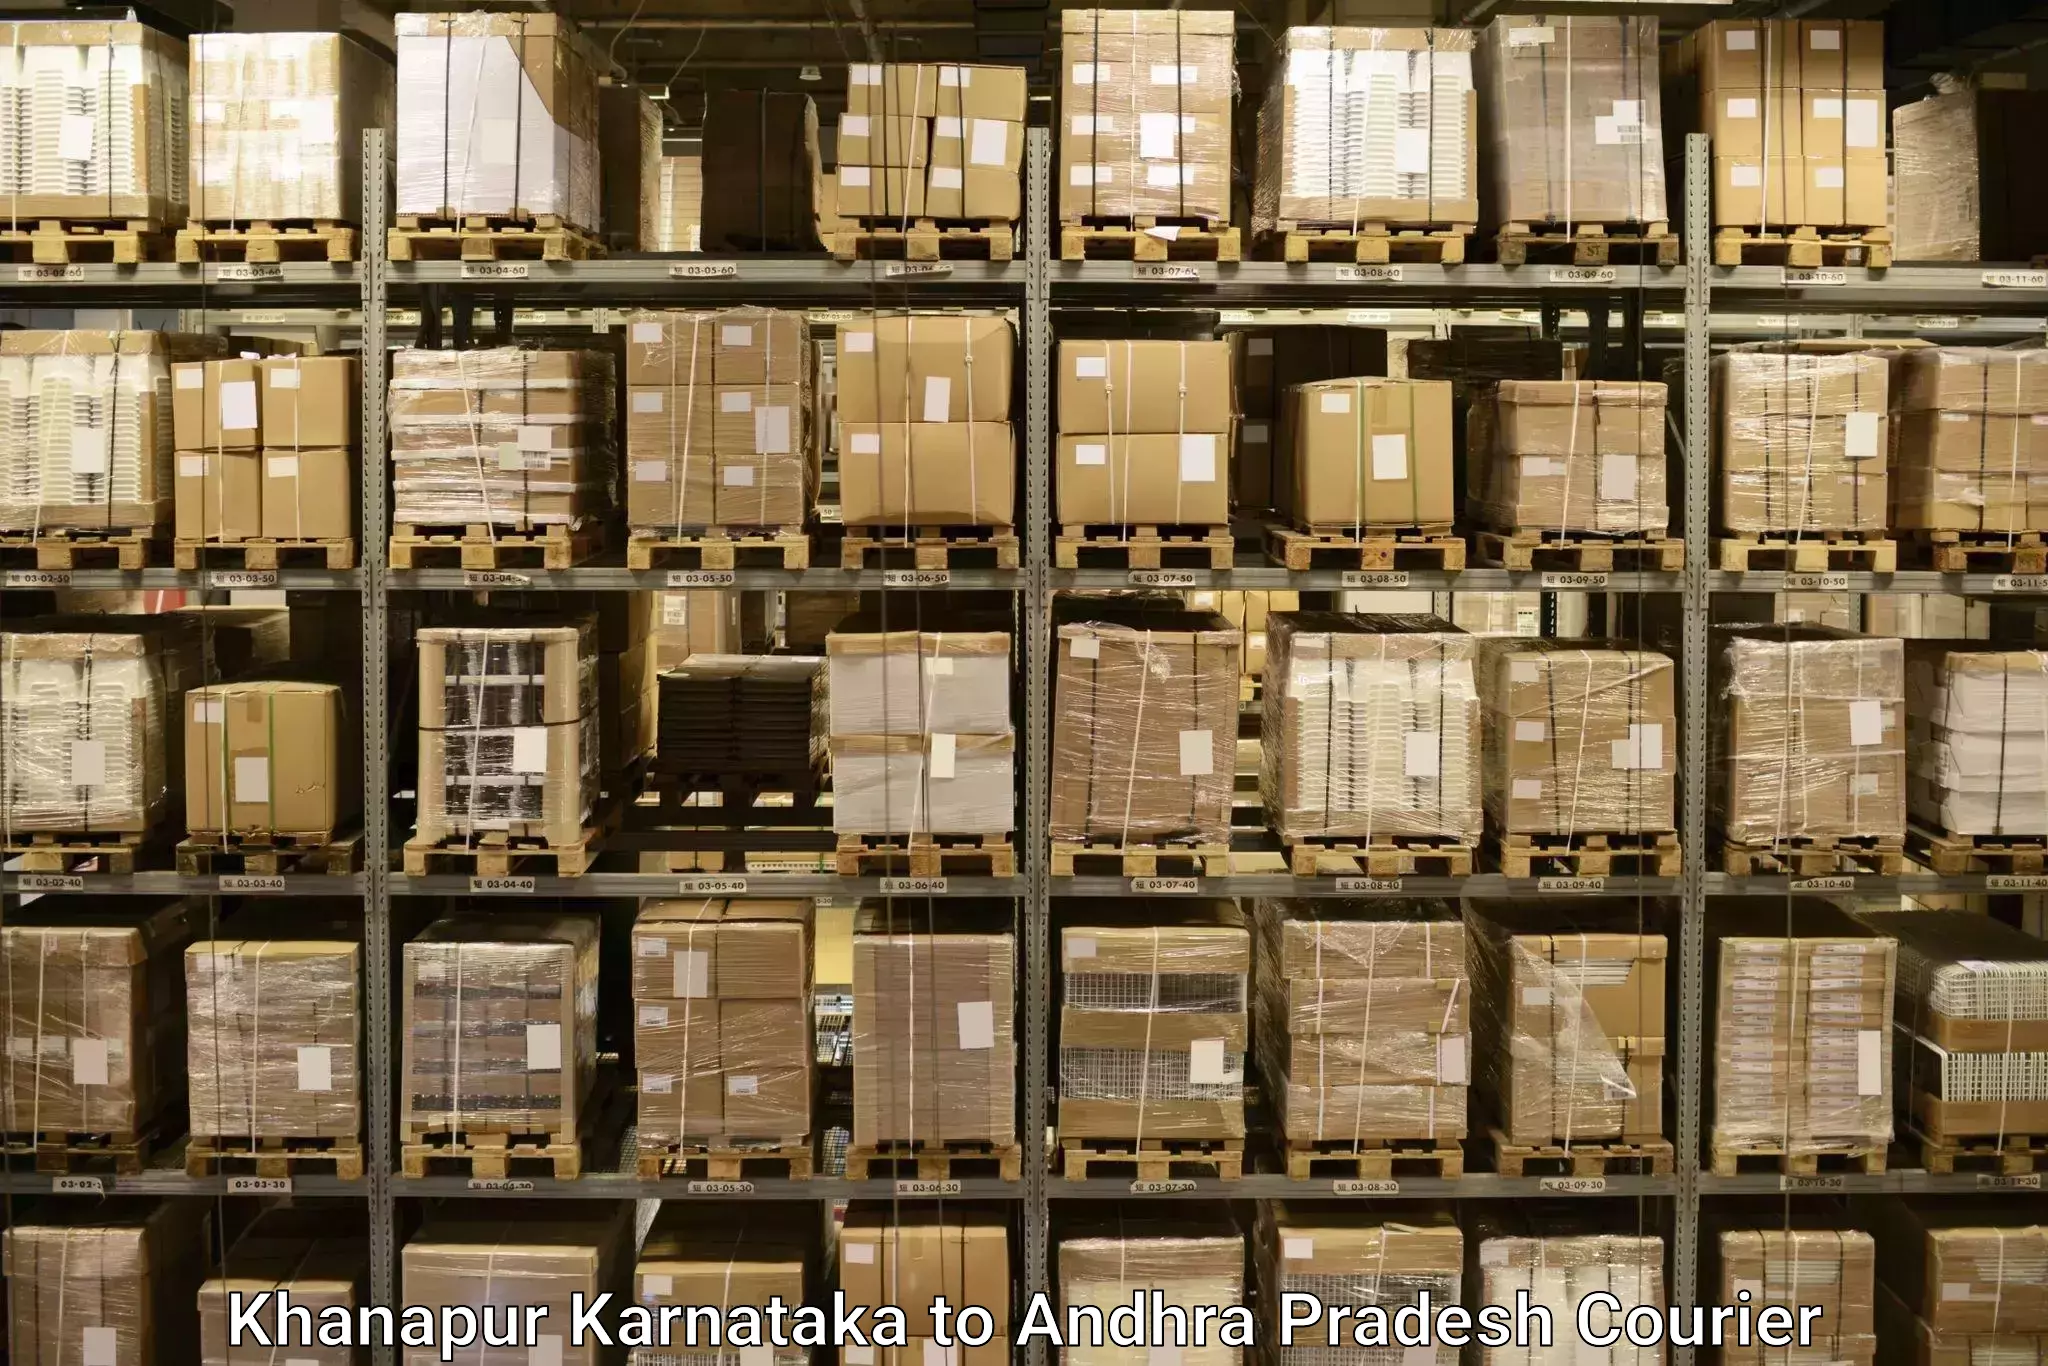 Luggage delivery network Khanapur Karnataka to Chintalapudi